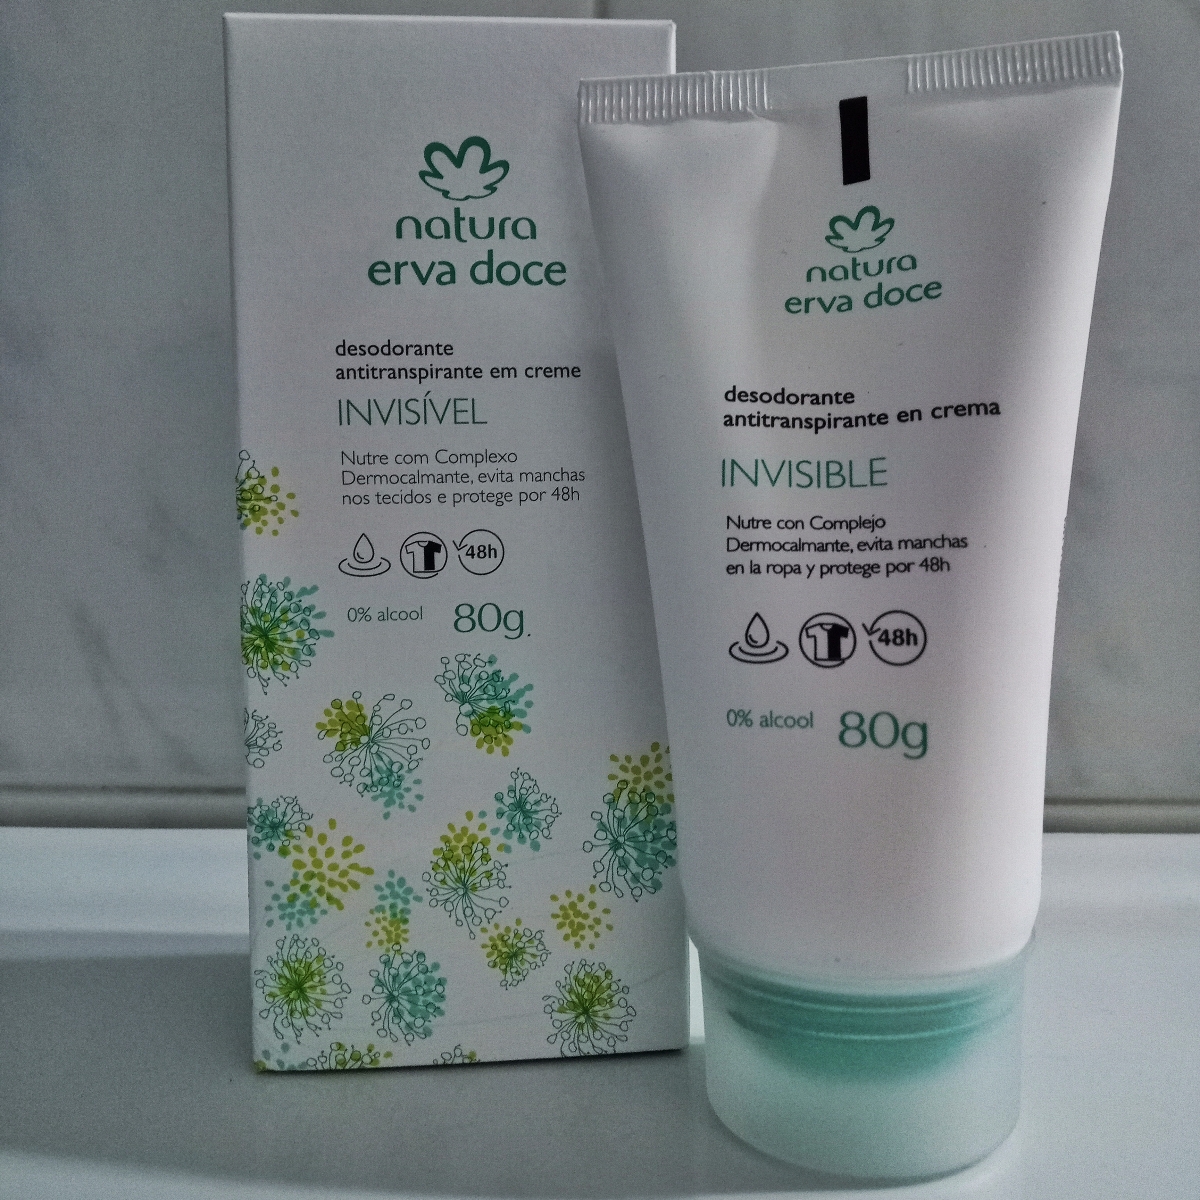 Natura Desodorante en Crema Antitranspirante Erva Doce Review | abillion